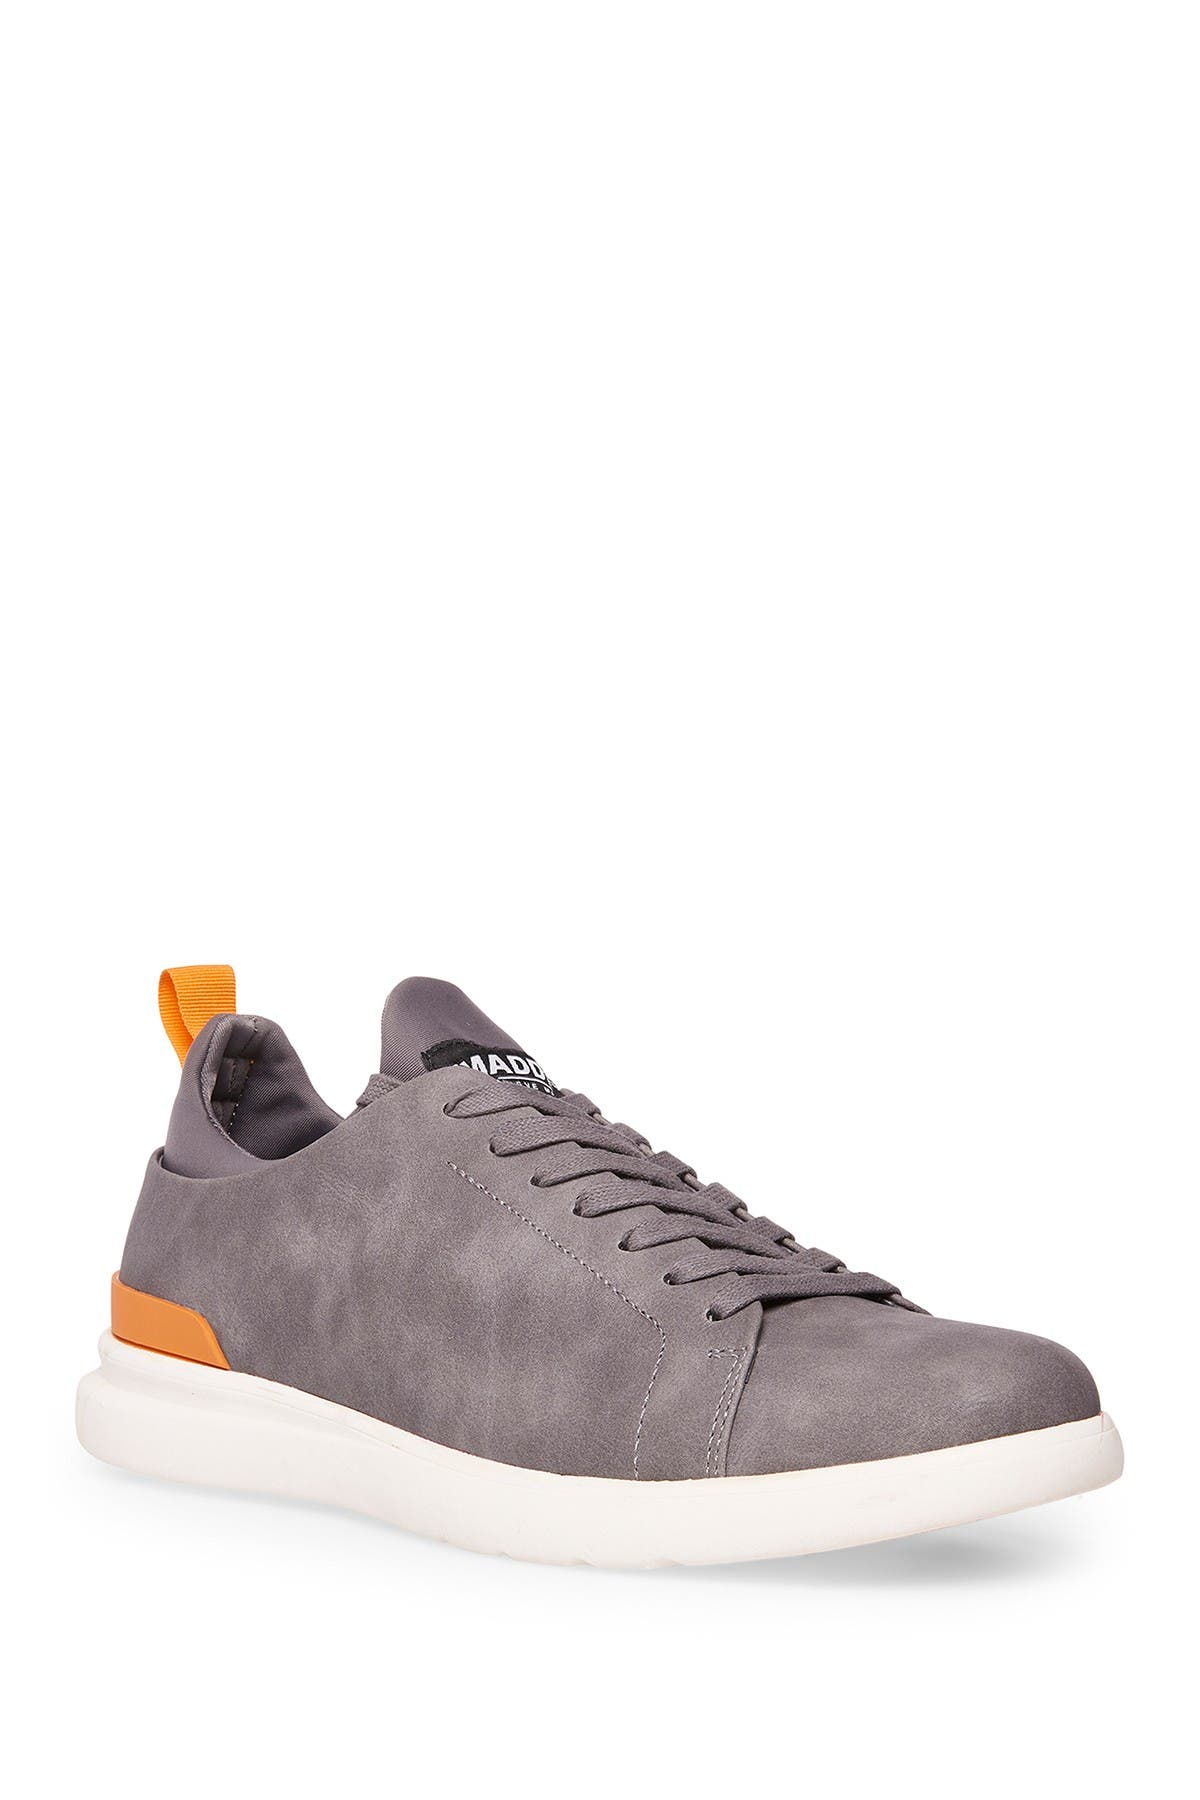 Madden Binden Casual Dress Sneaker In Grey